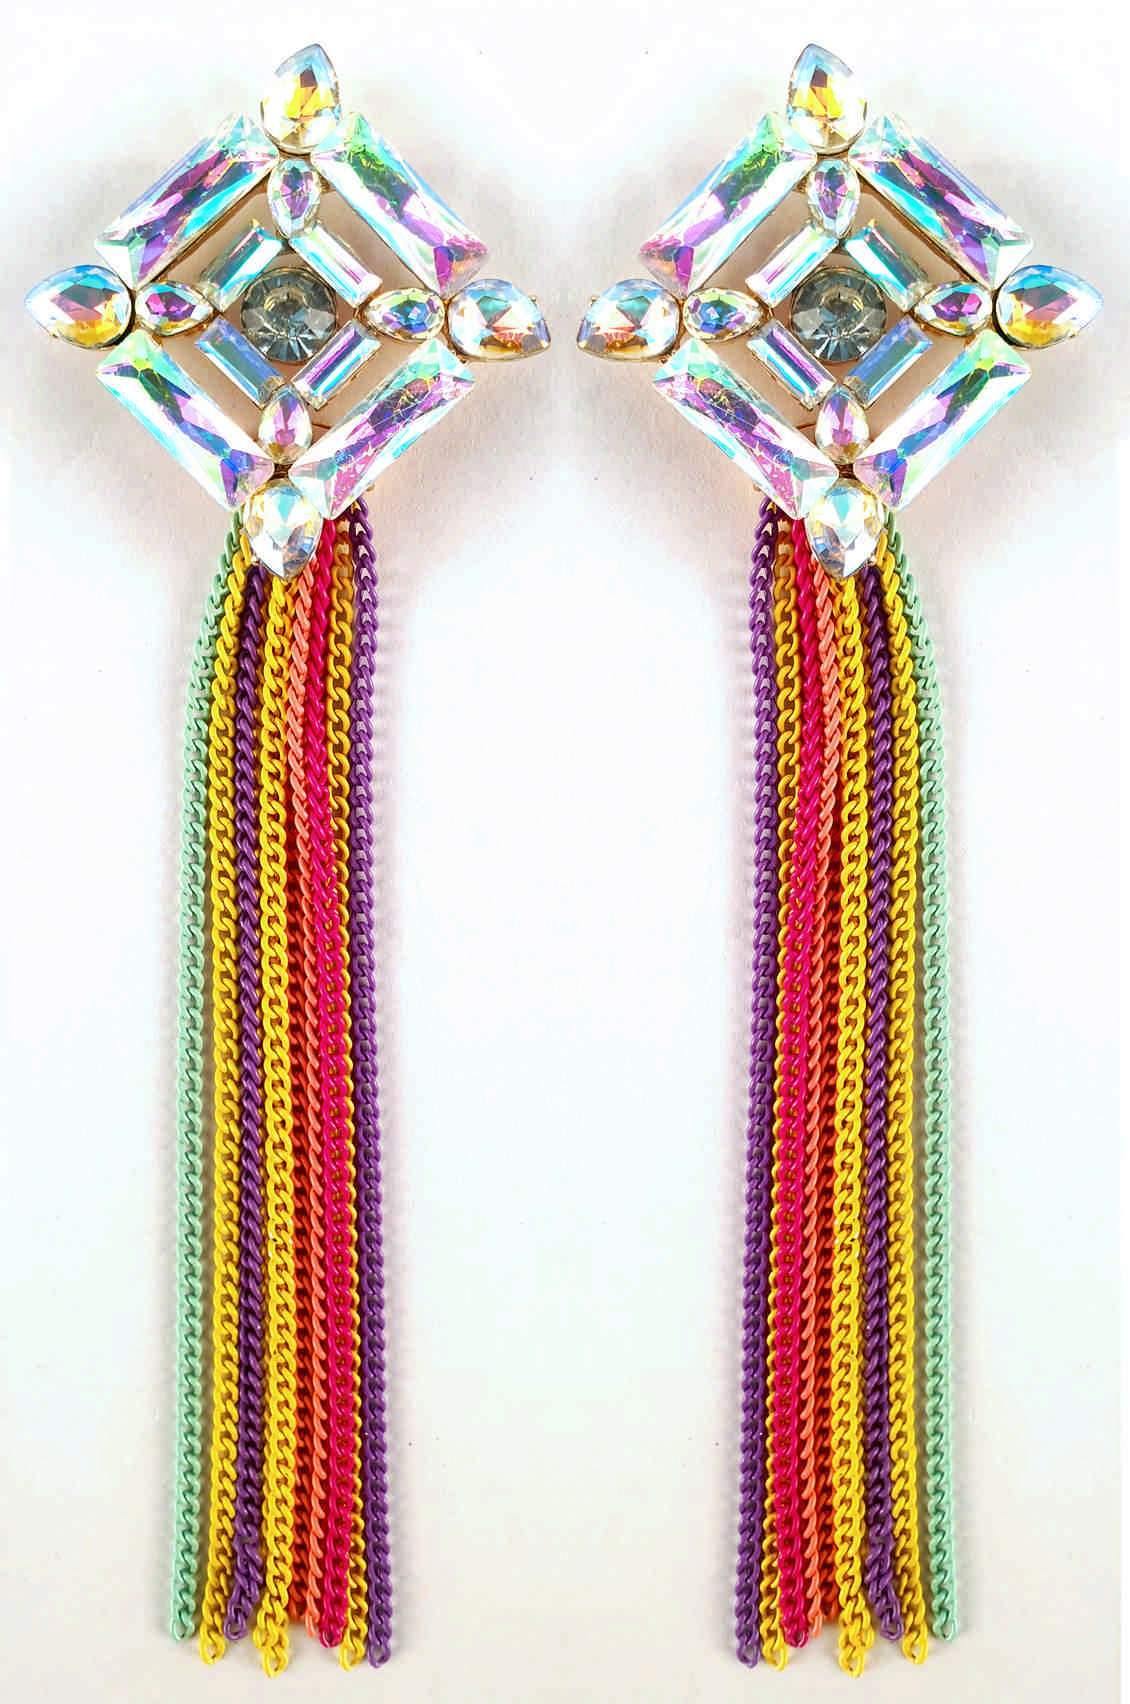 Indian Petals Crystal Chandelier Design Artificial Fashion Dangler Earrings Jhumka with Tassales for Girls Women, Multi